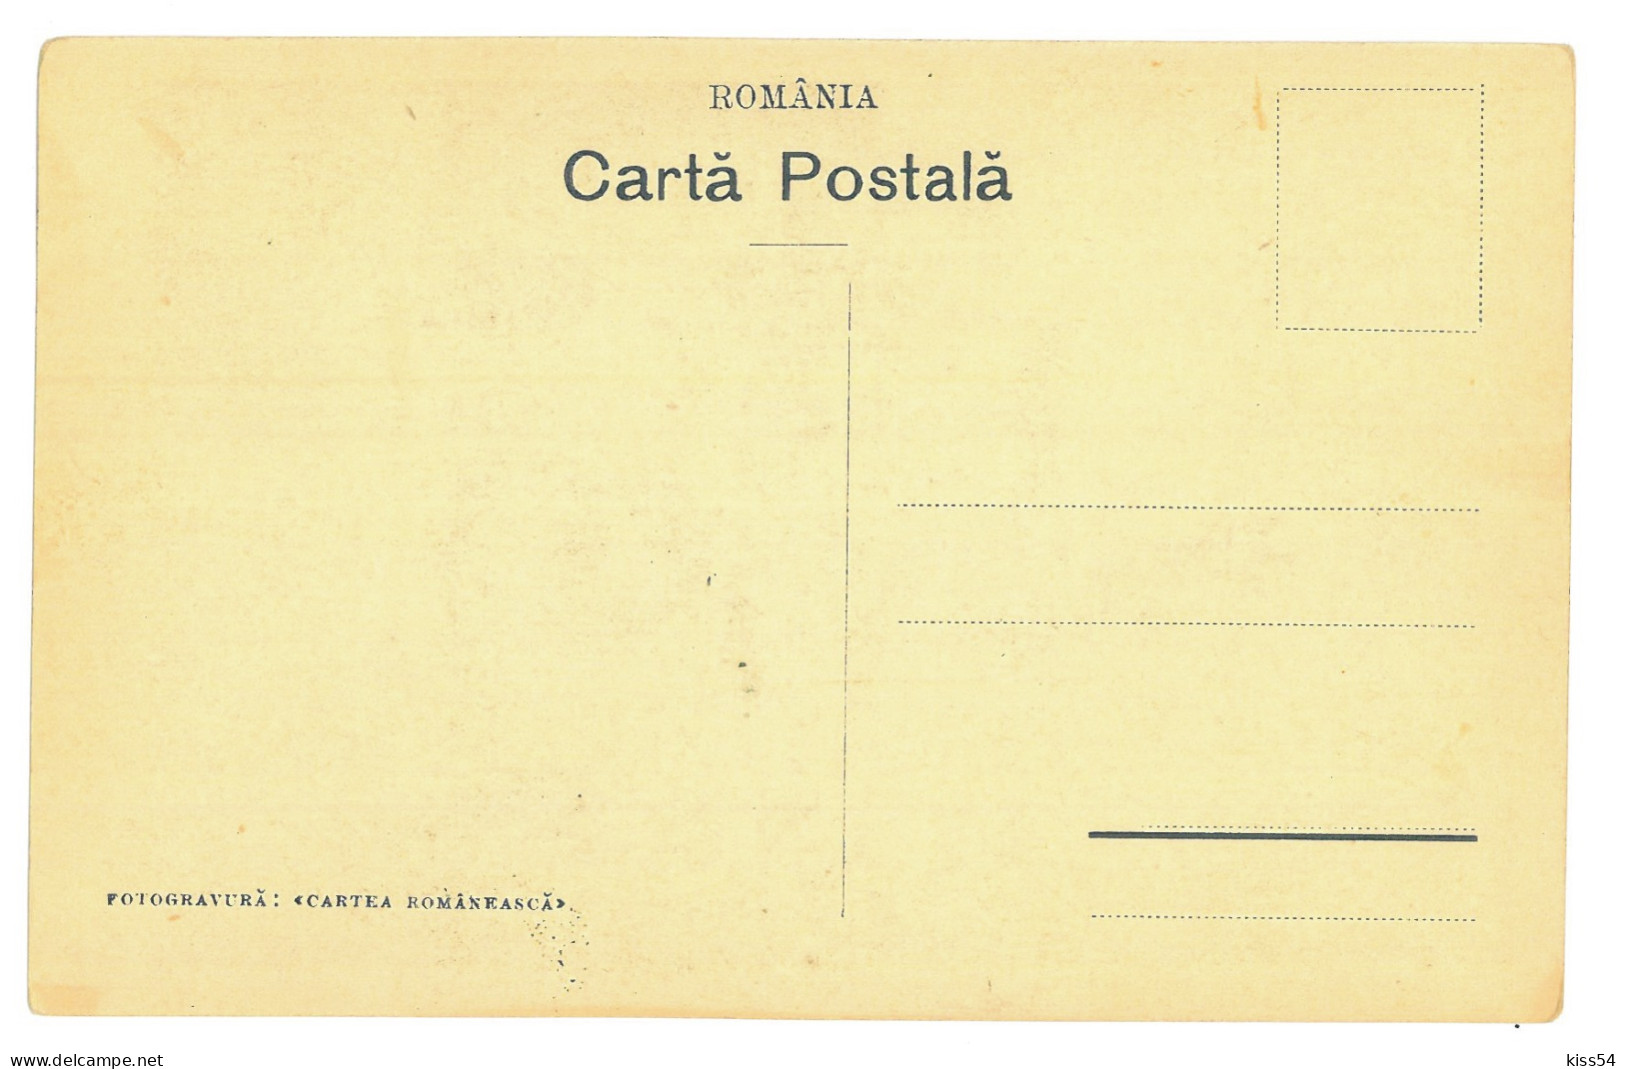 RO 83 - 16665 ALBA-IULIA, Poarta Cetatii, Romania - Old Postcard - Unused - Romania